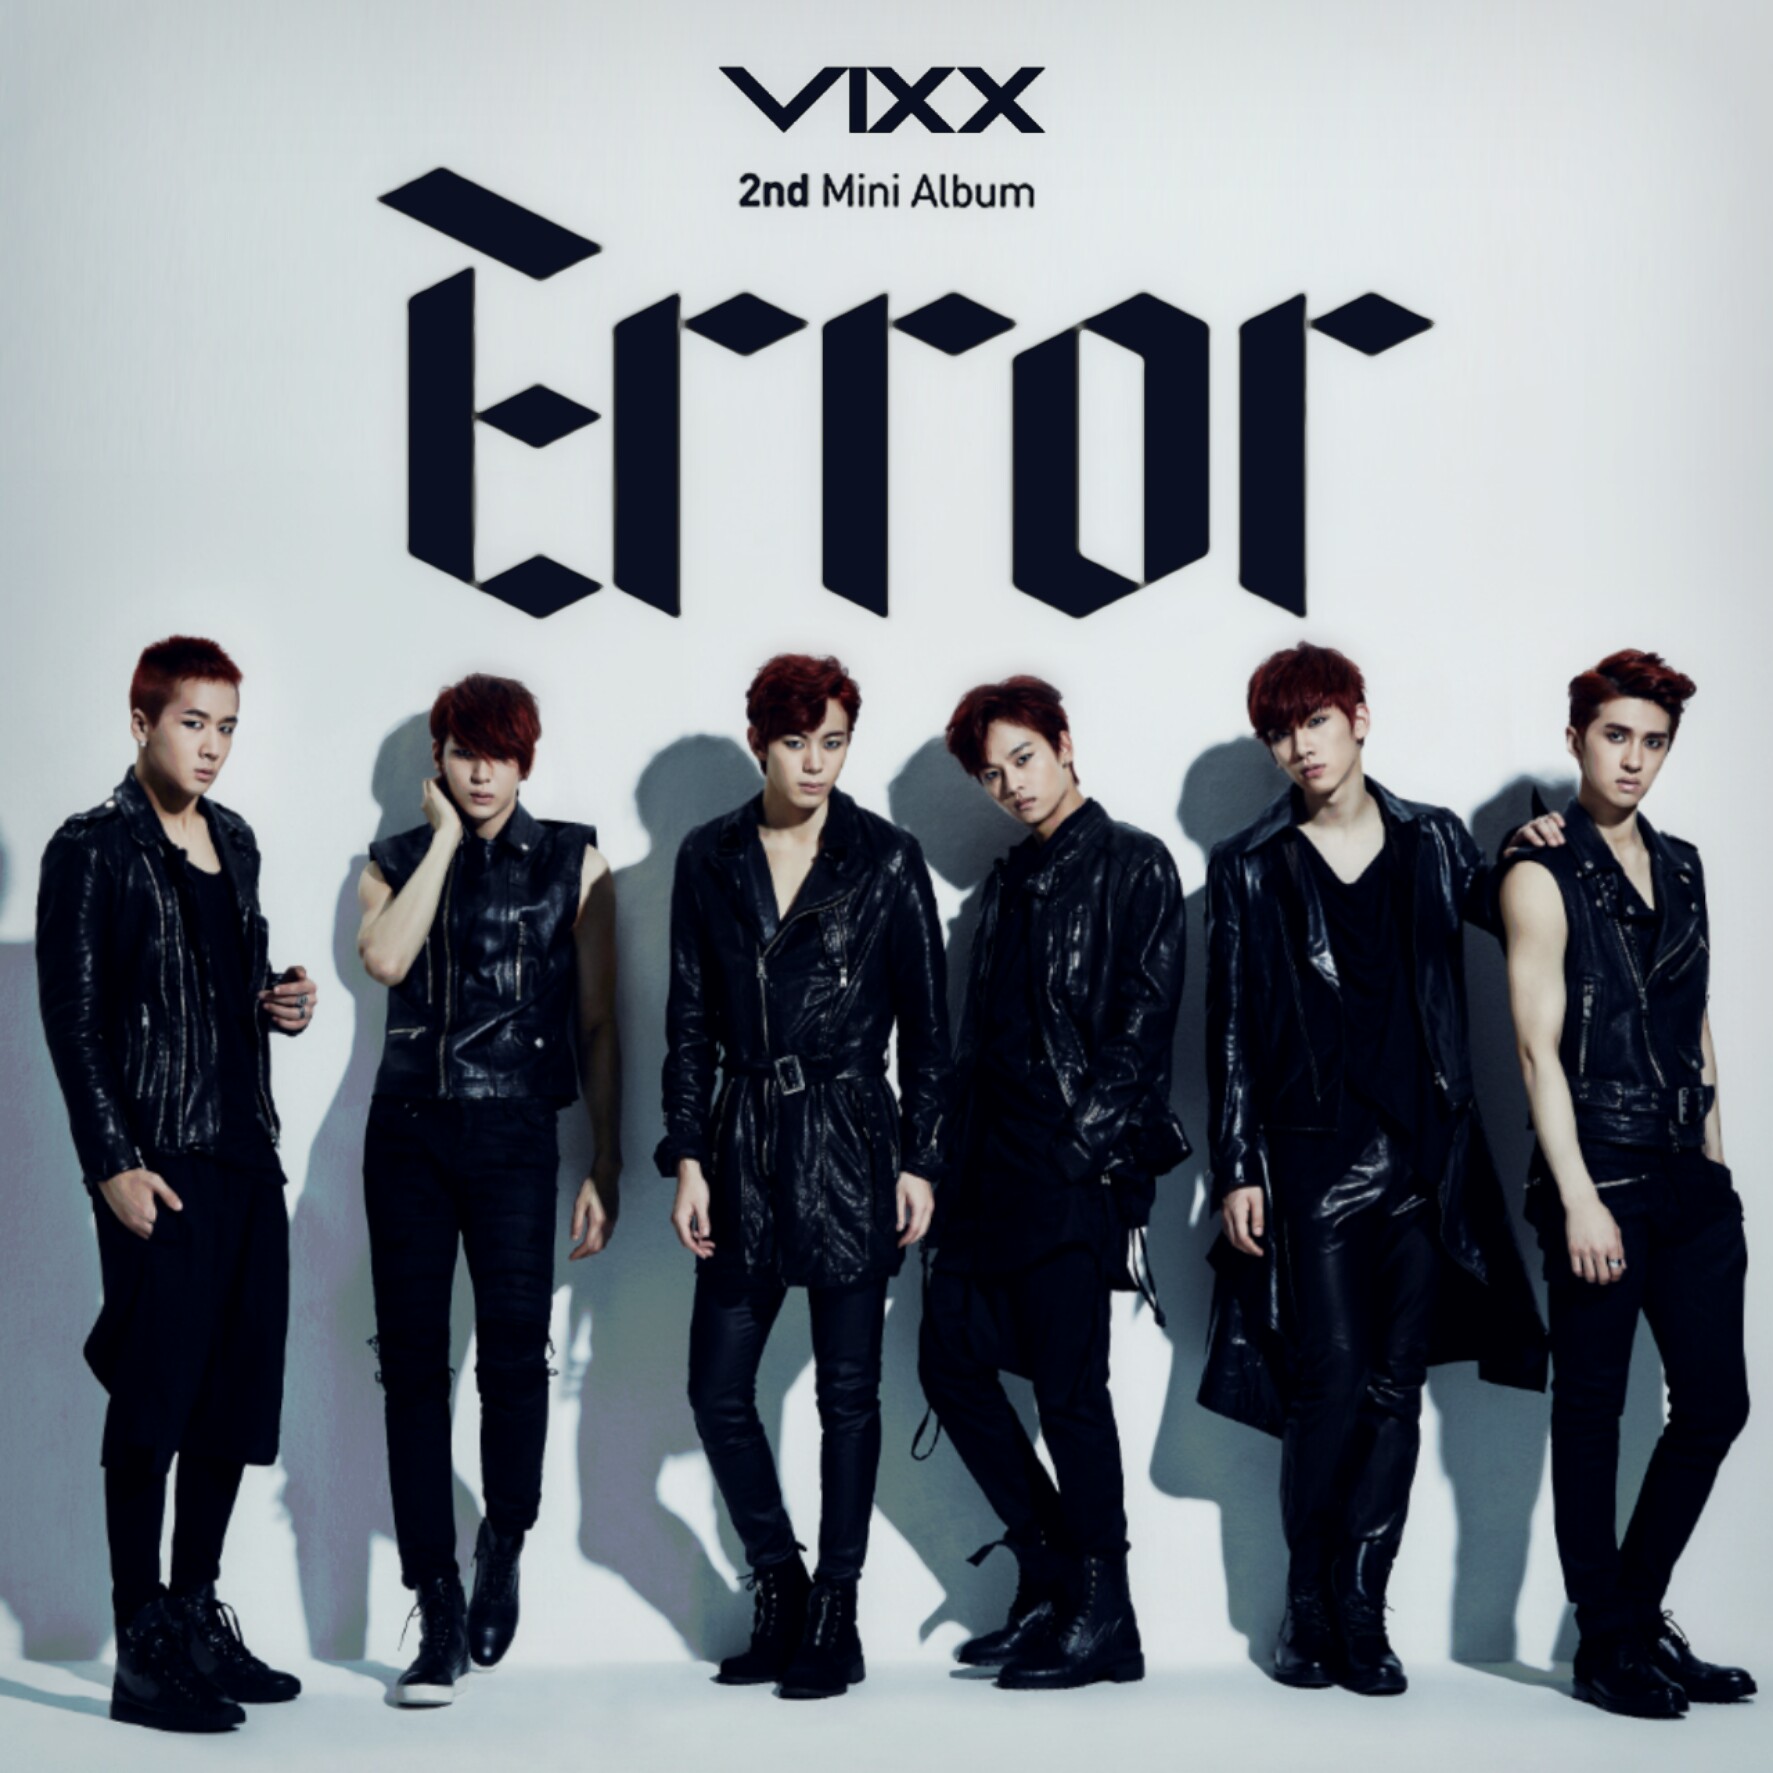 vixx-error-album-cover-by-lealbum-on-deviantart